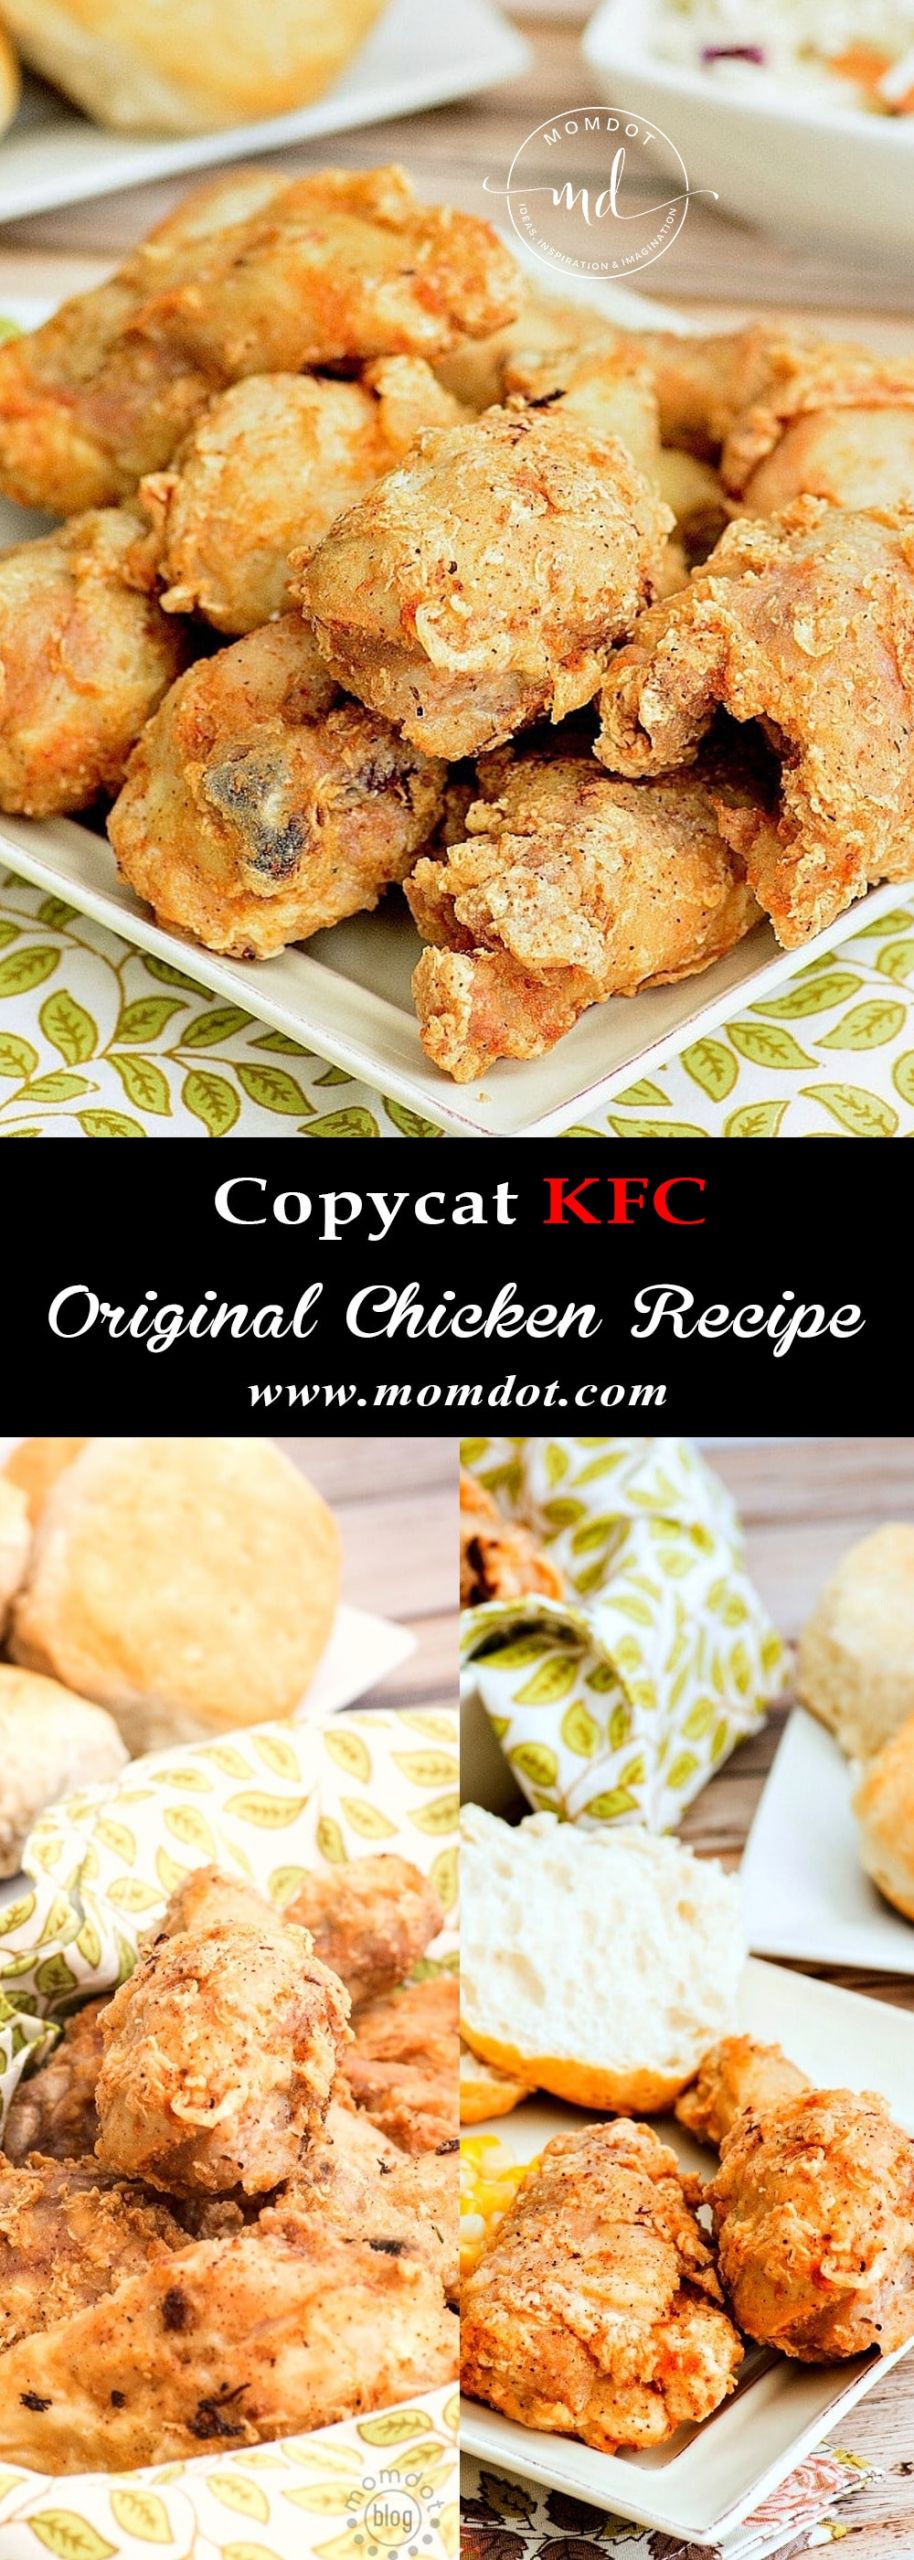 Kfc Original Recipe Chicken Whole Wing
 Copycat KFC Original Chicken Recipe